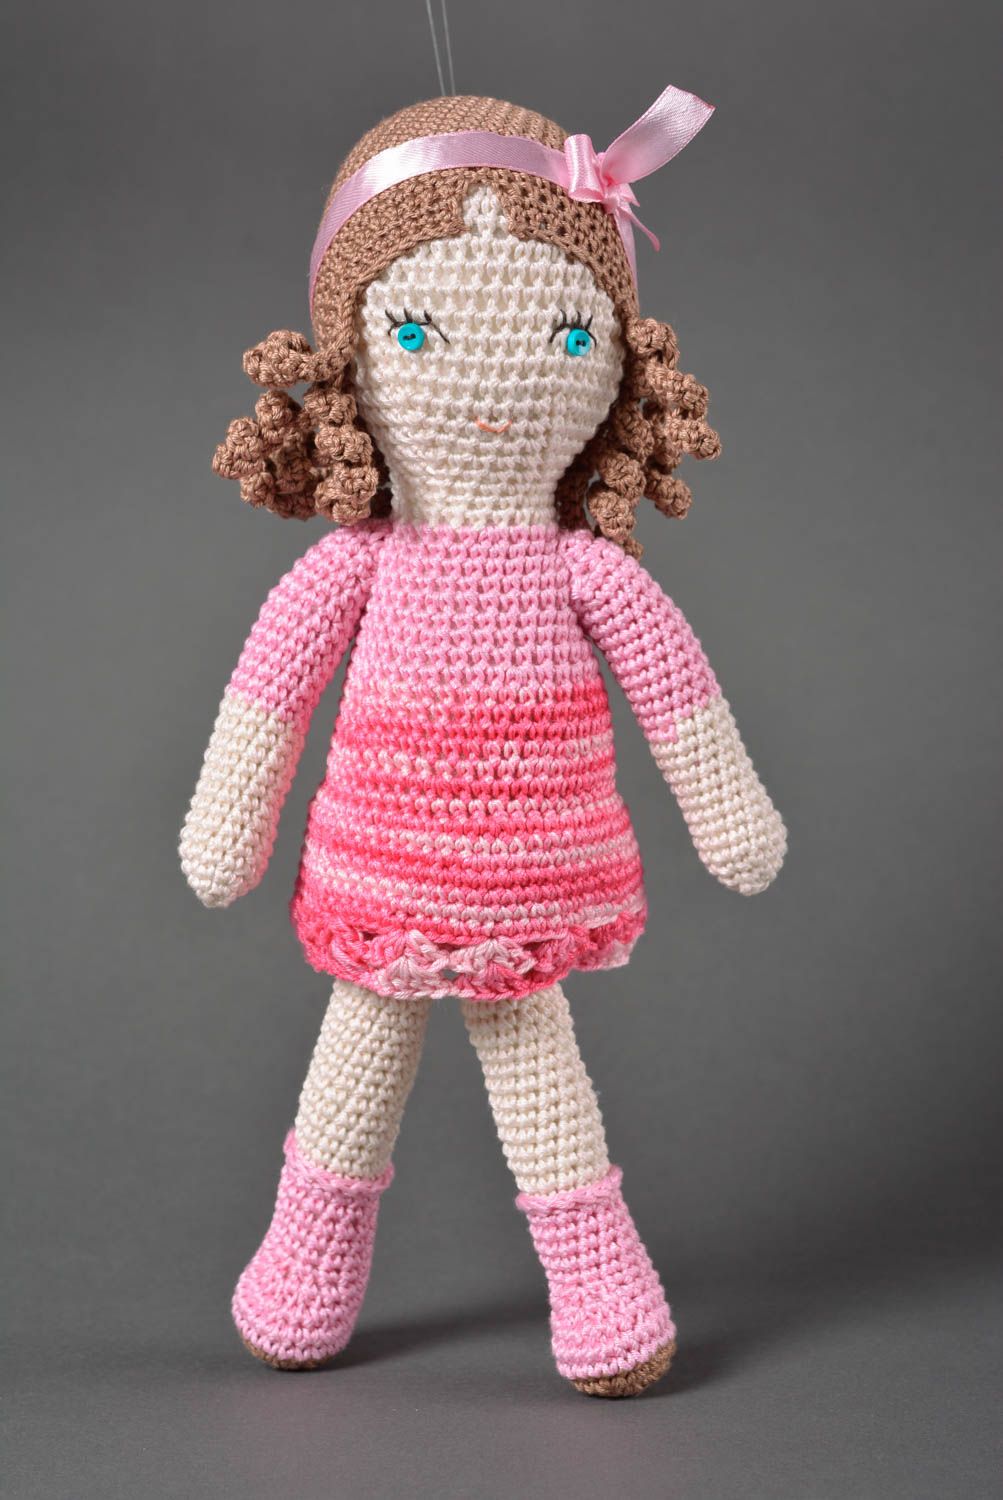 Handmade doll designer doll soft toy doll for girls decor ideas gift ideas photo 1